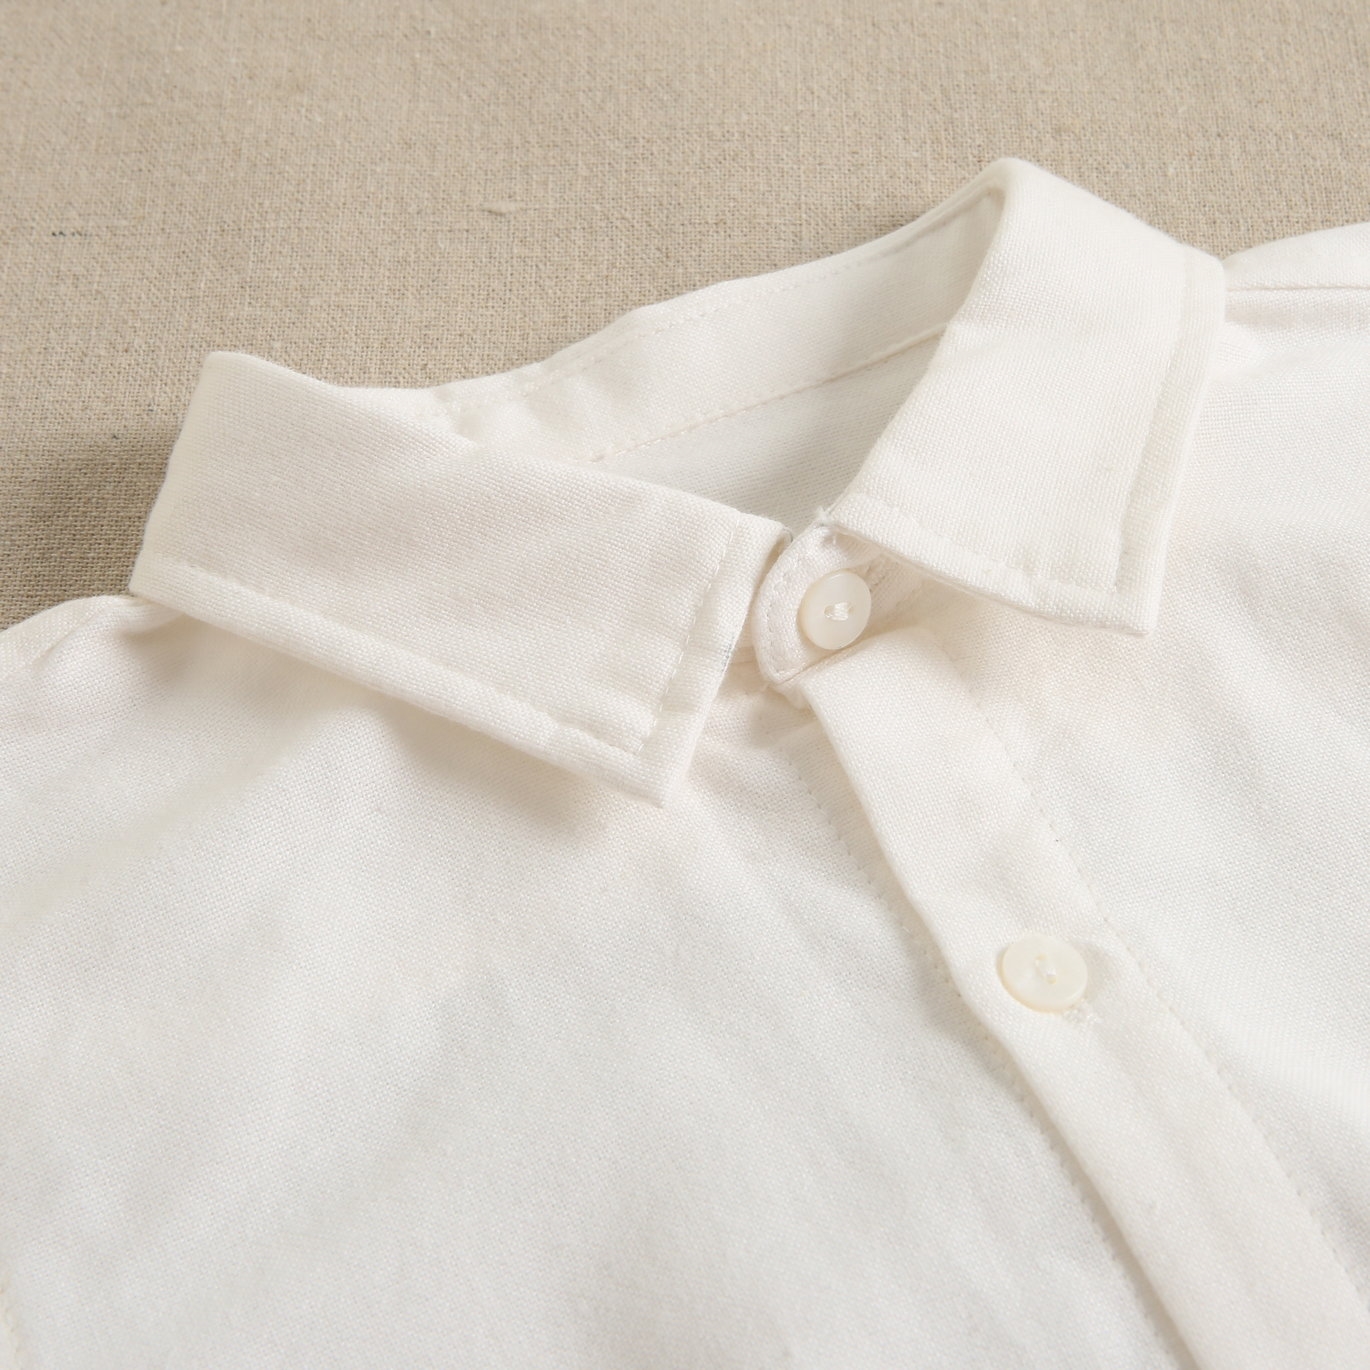 Imagen de Camisa de niño manga remangable blanca